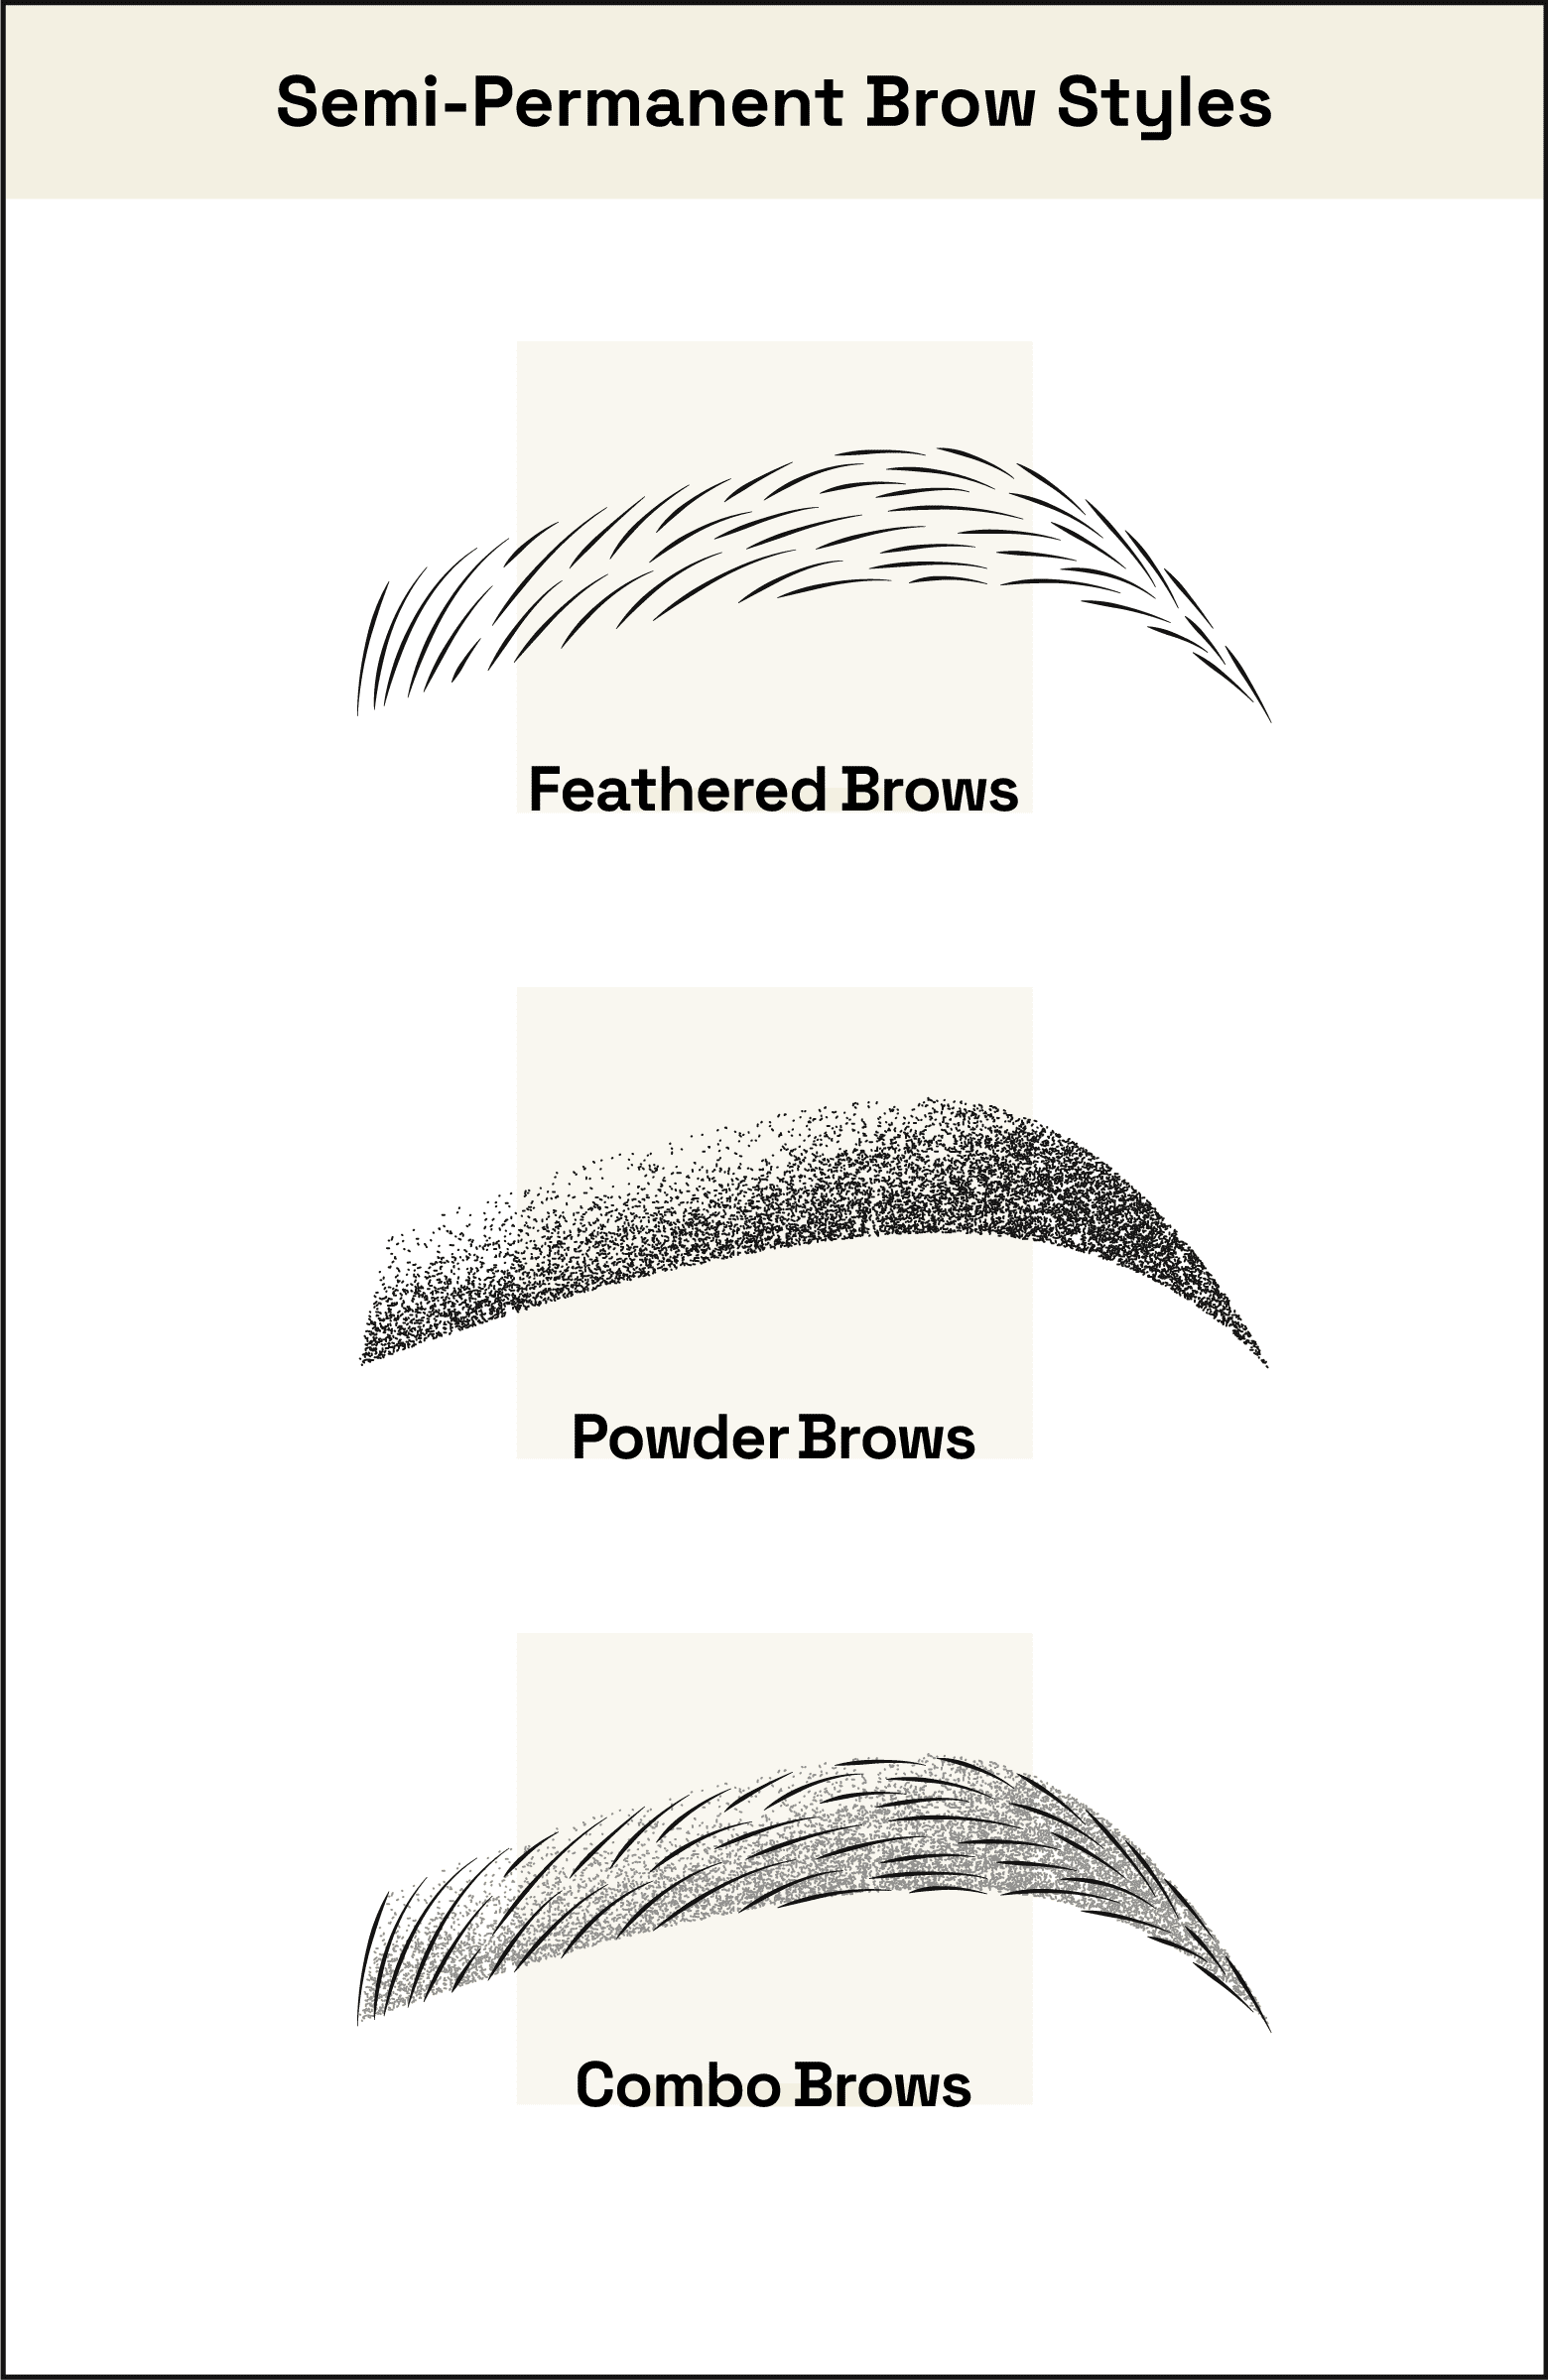 semi-permanent brow styles
